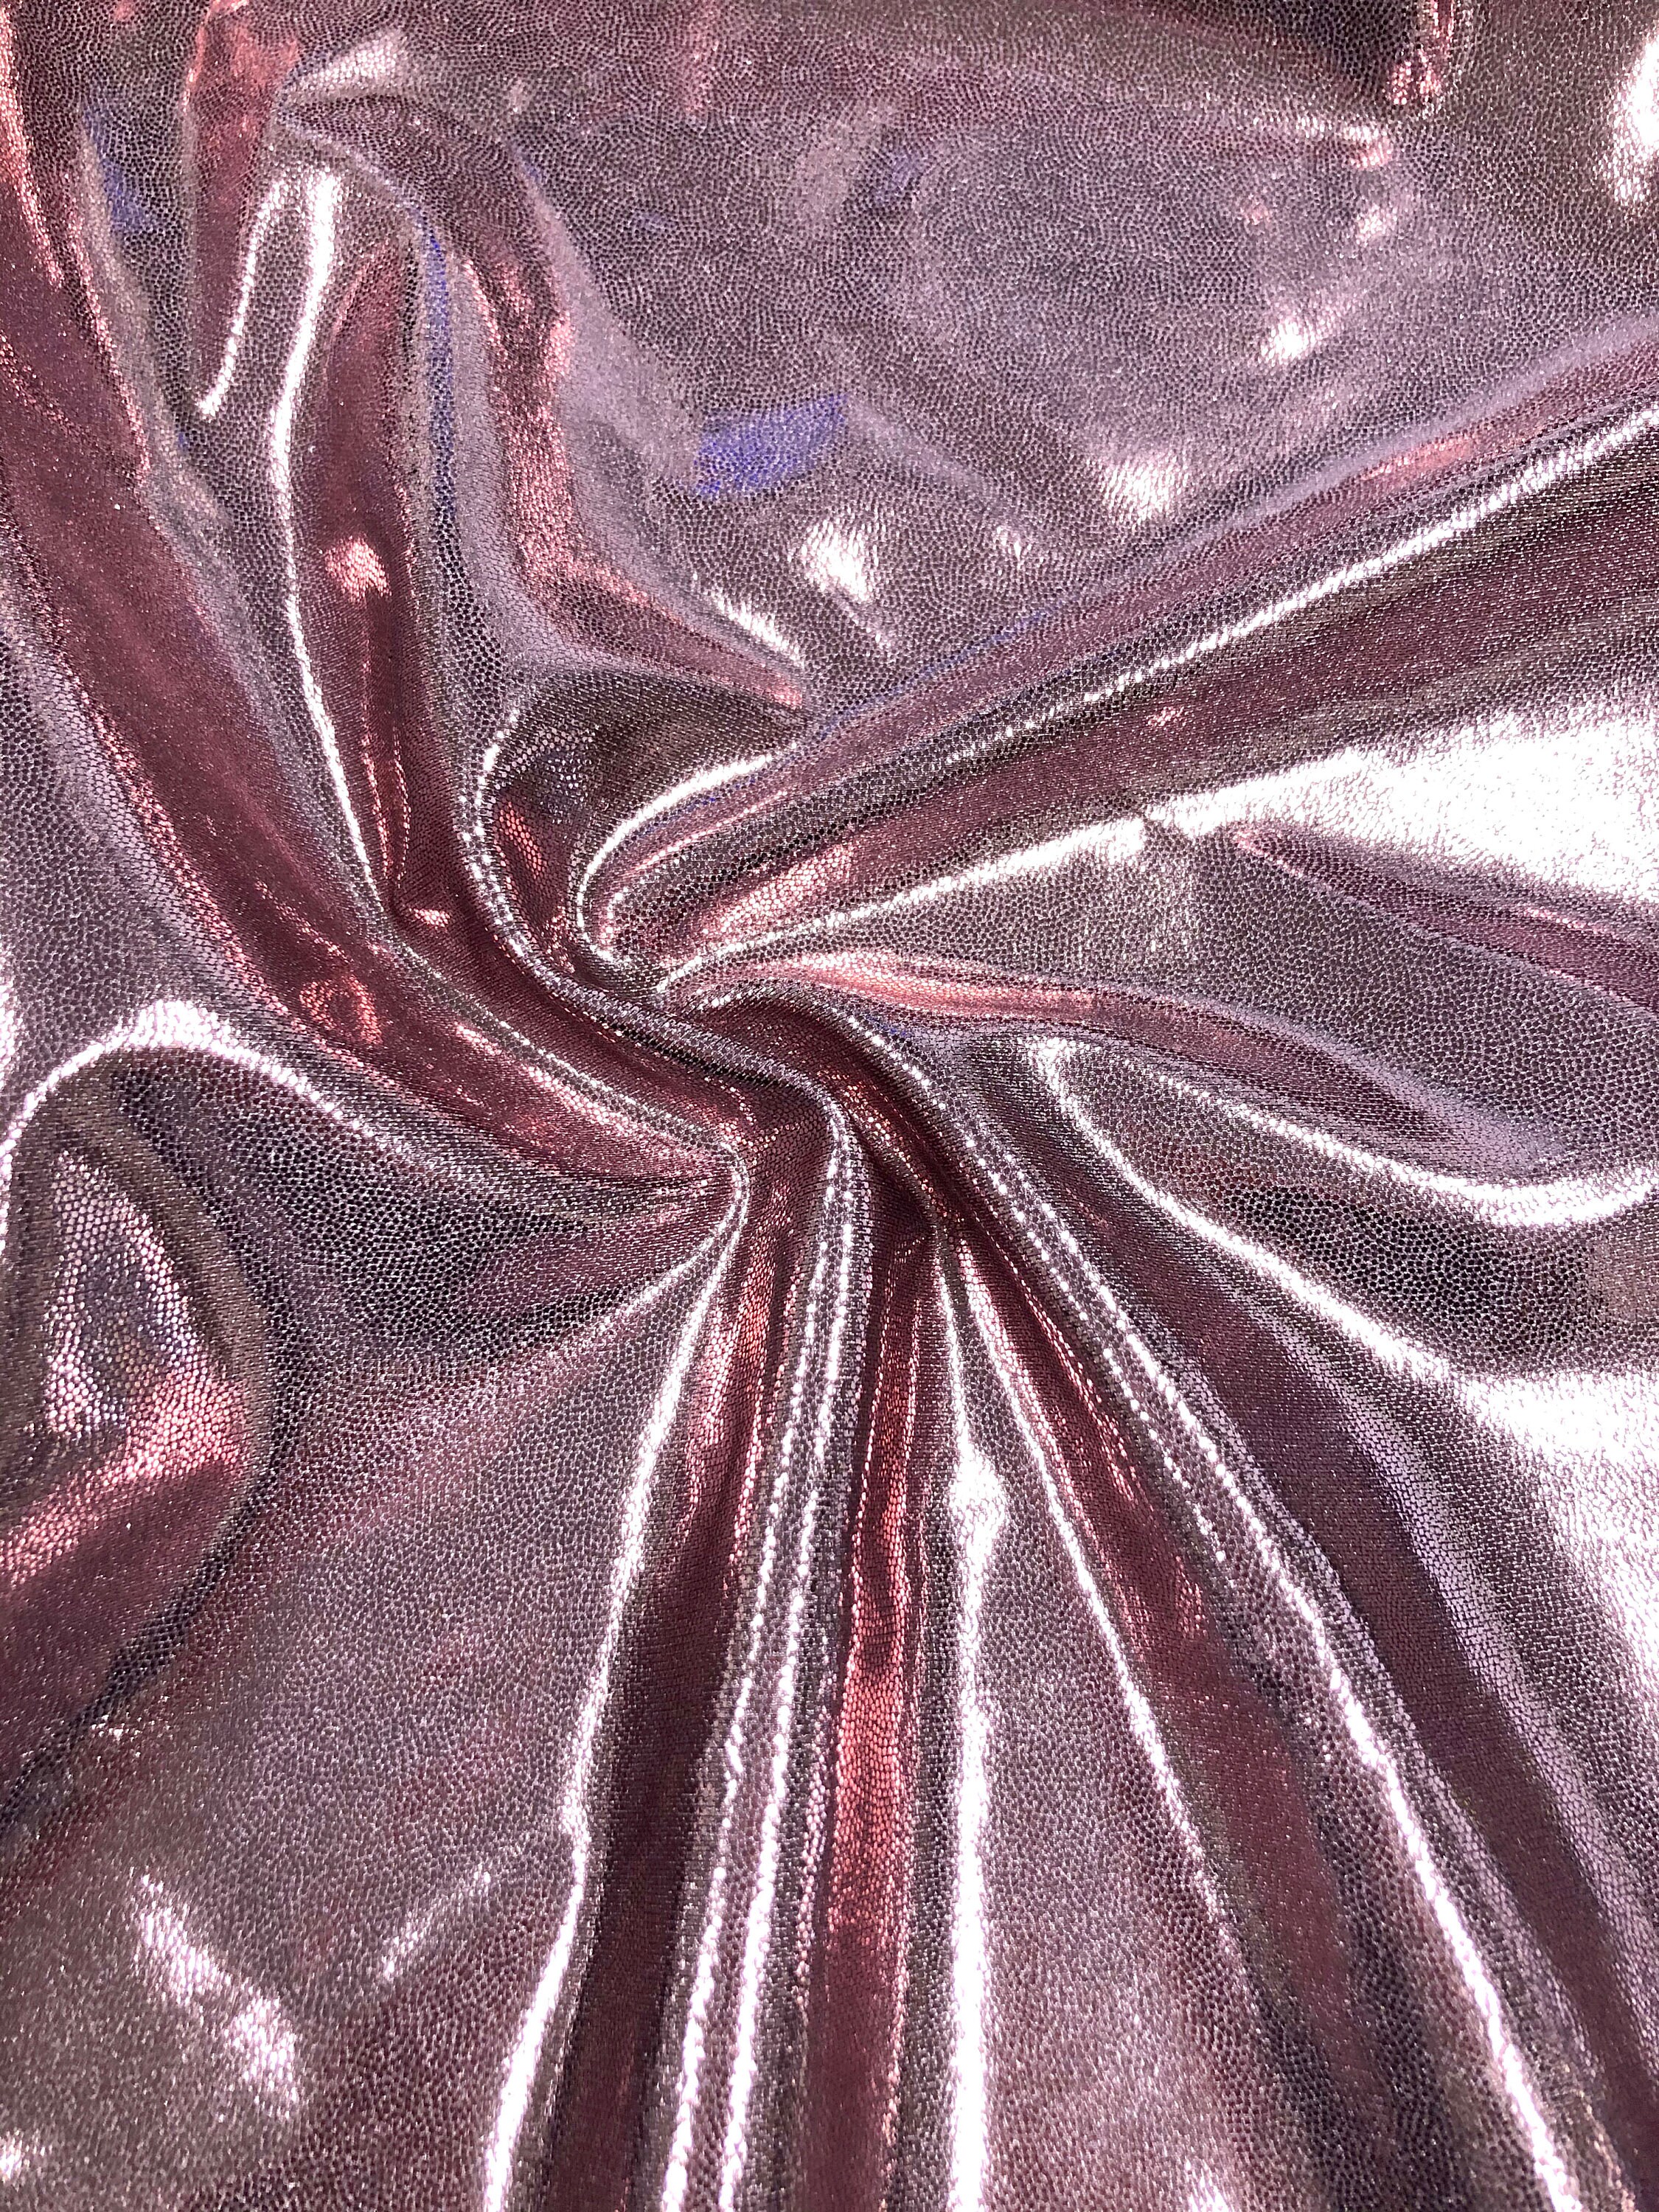  Shiny Finger Foil 4-Way Stretch Heavy Nylon Spandex Fabric ( Black)